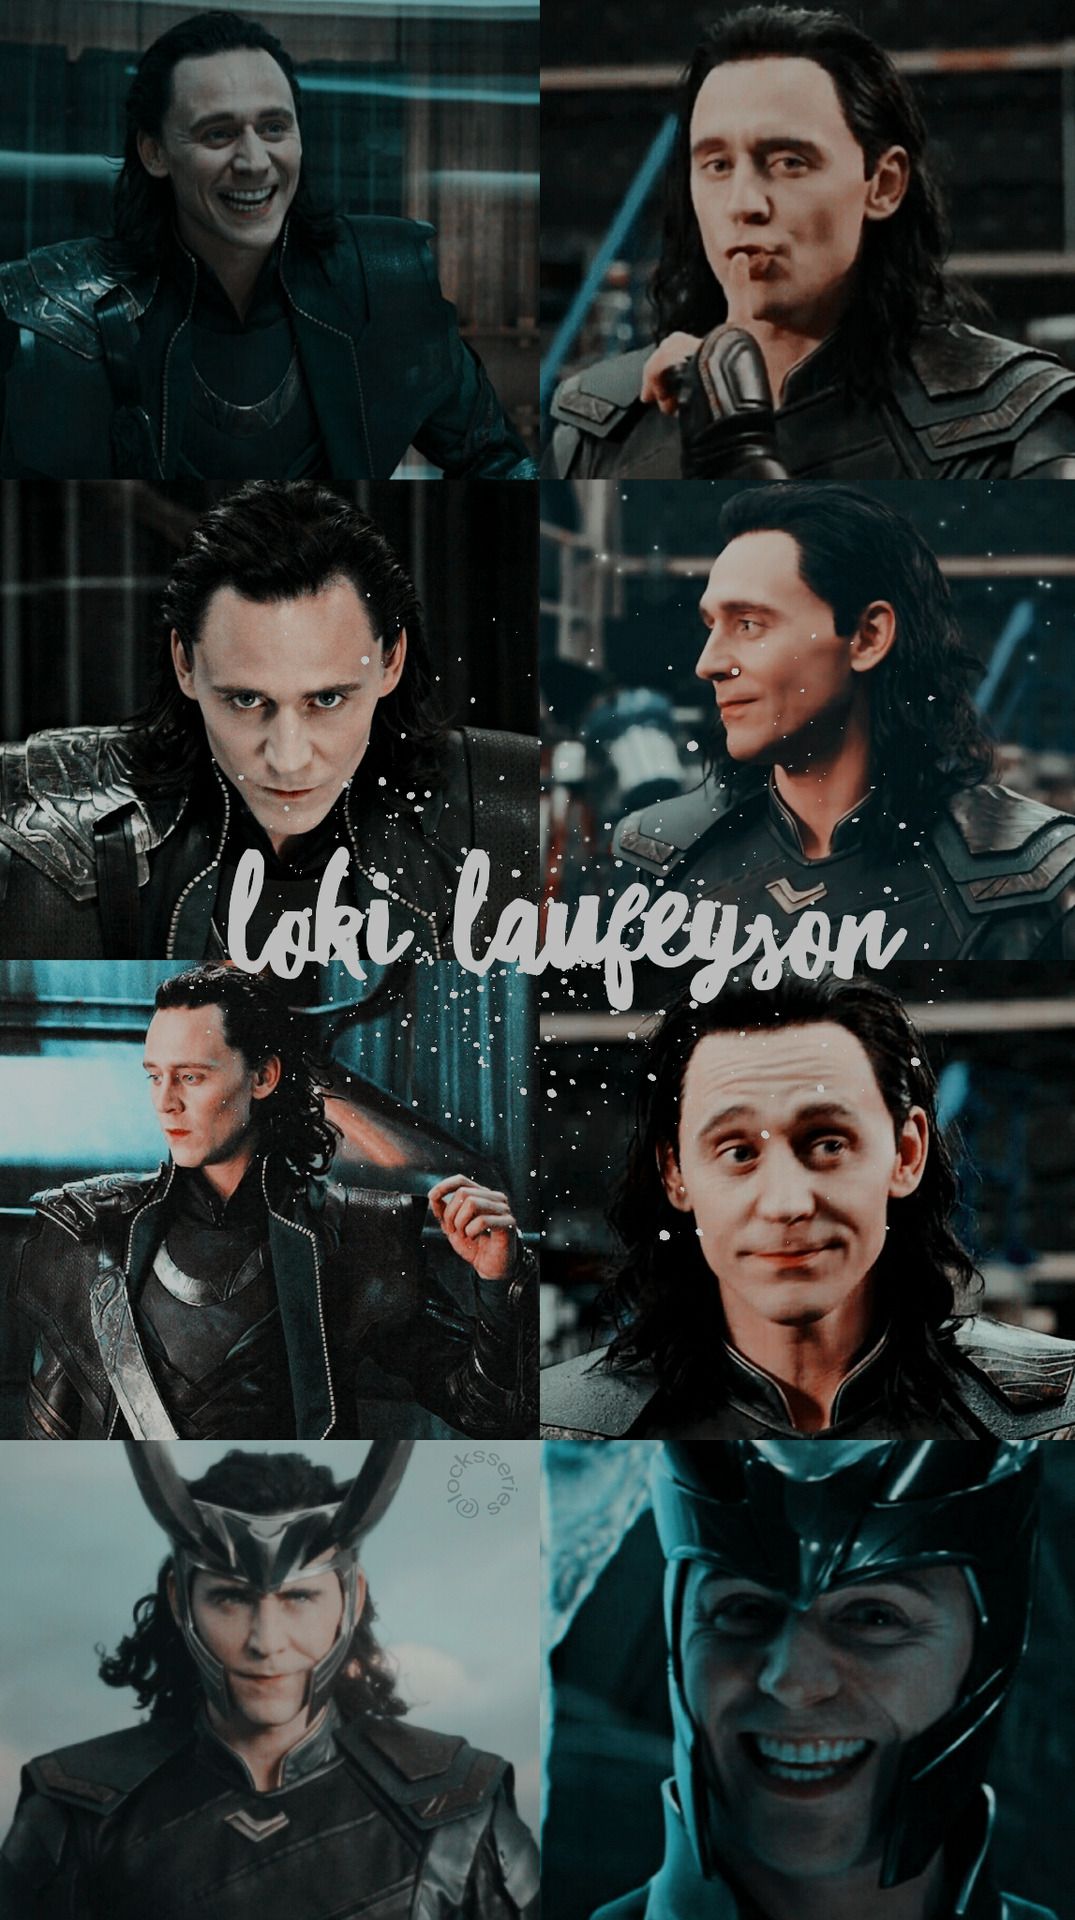 locksxcreenxs. Loki wallpaper, Loki marvel, Loki avengers